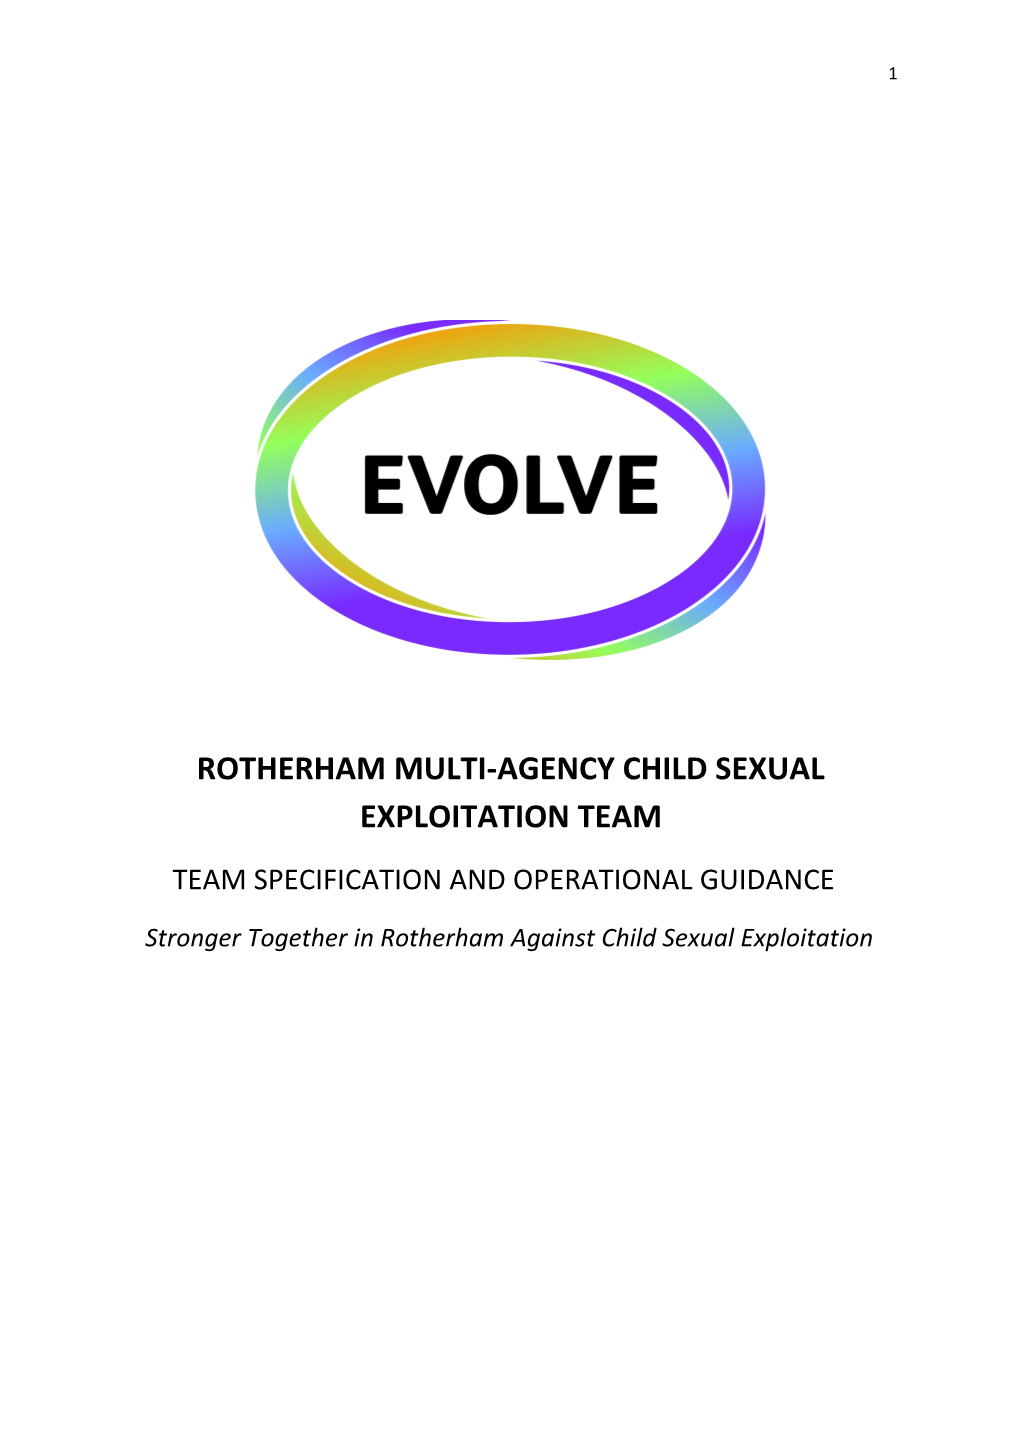 Rotherham Multi-Agency Child Sexual Exploitation Team